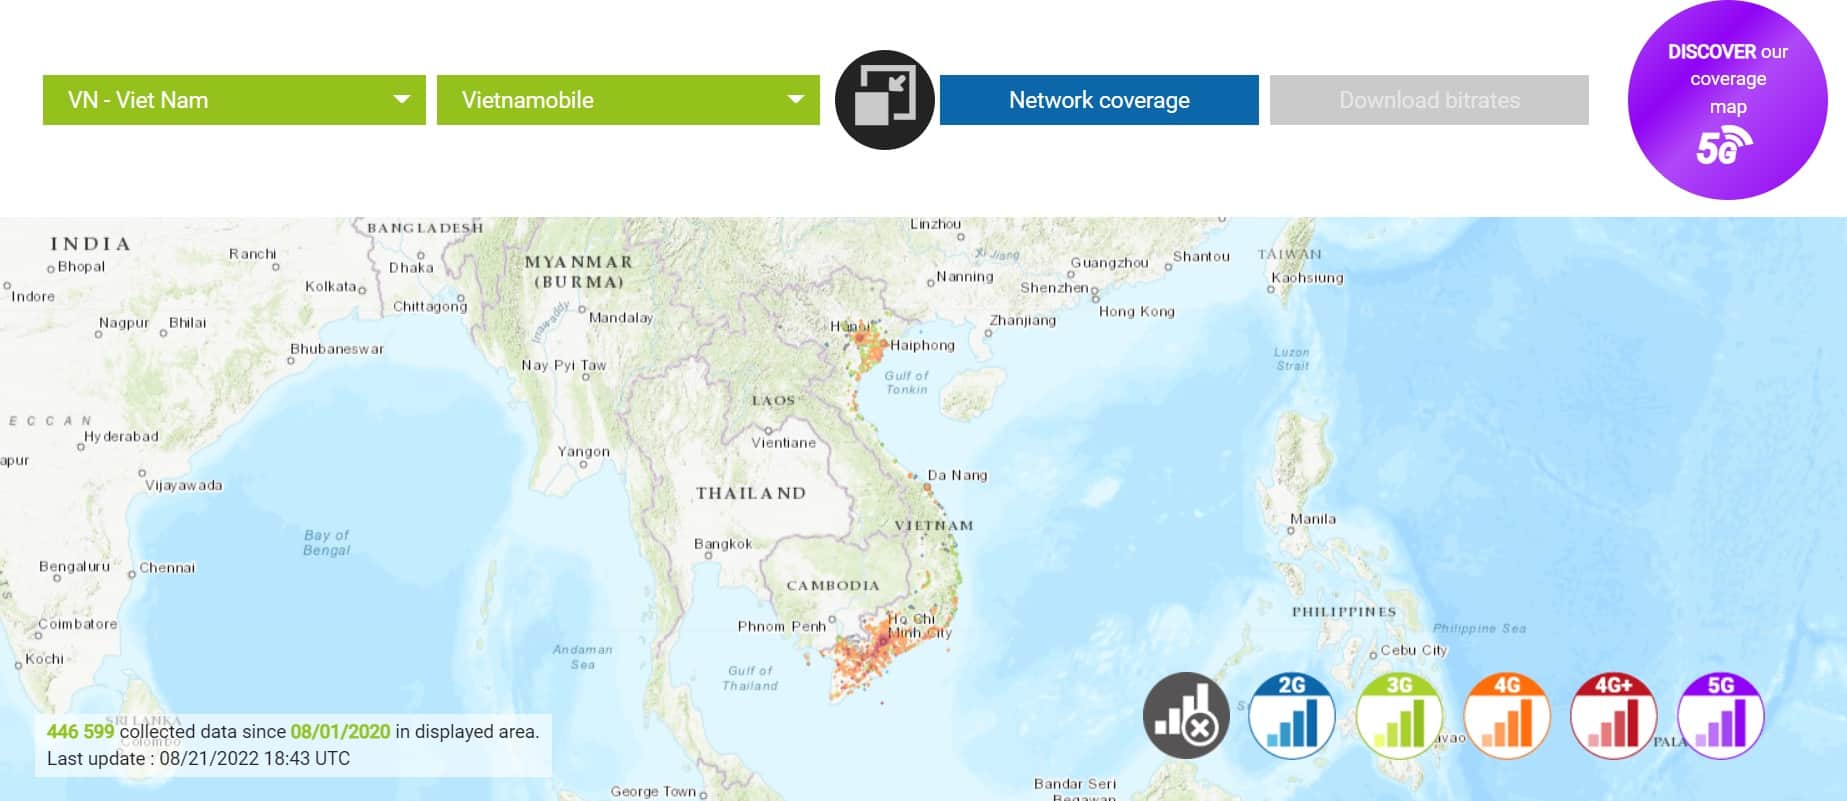 Vietnamobile network coverage map - Gigago